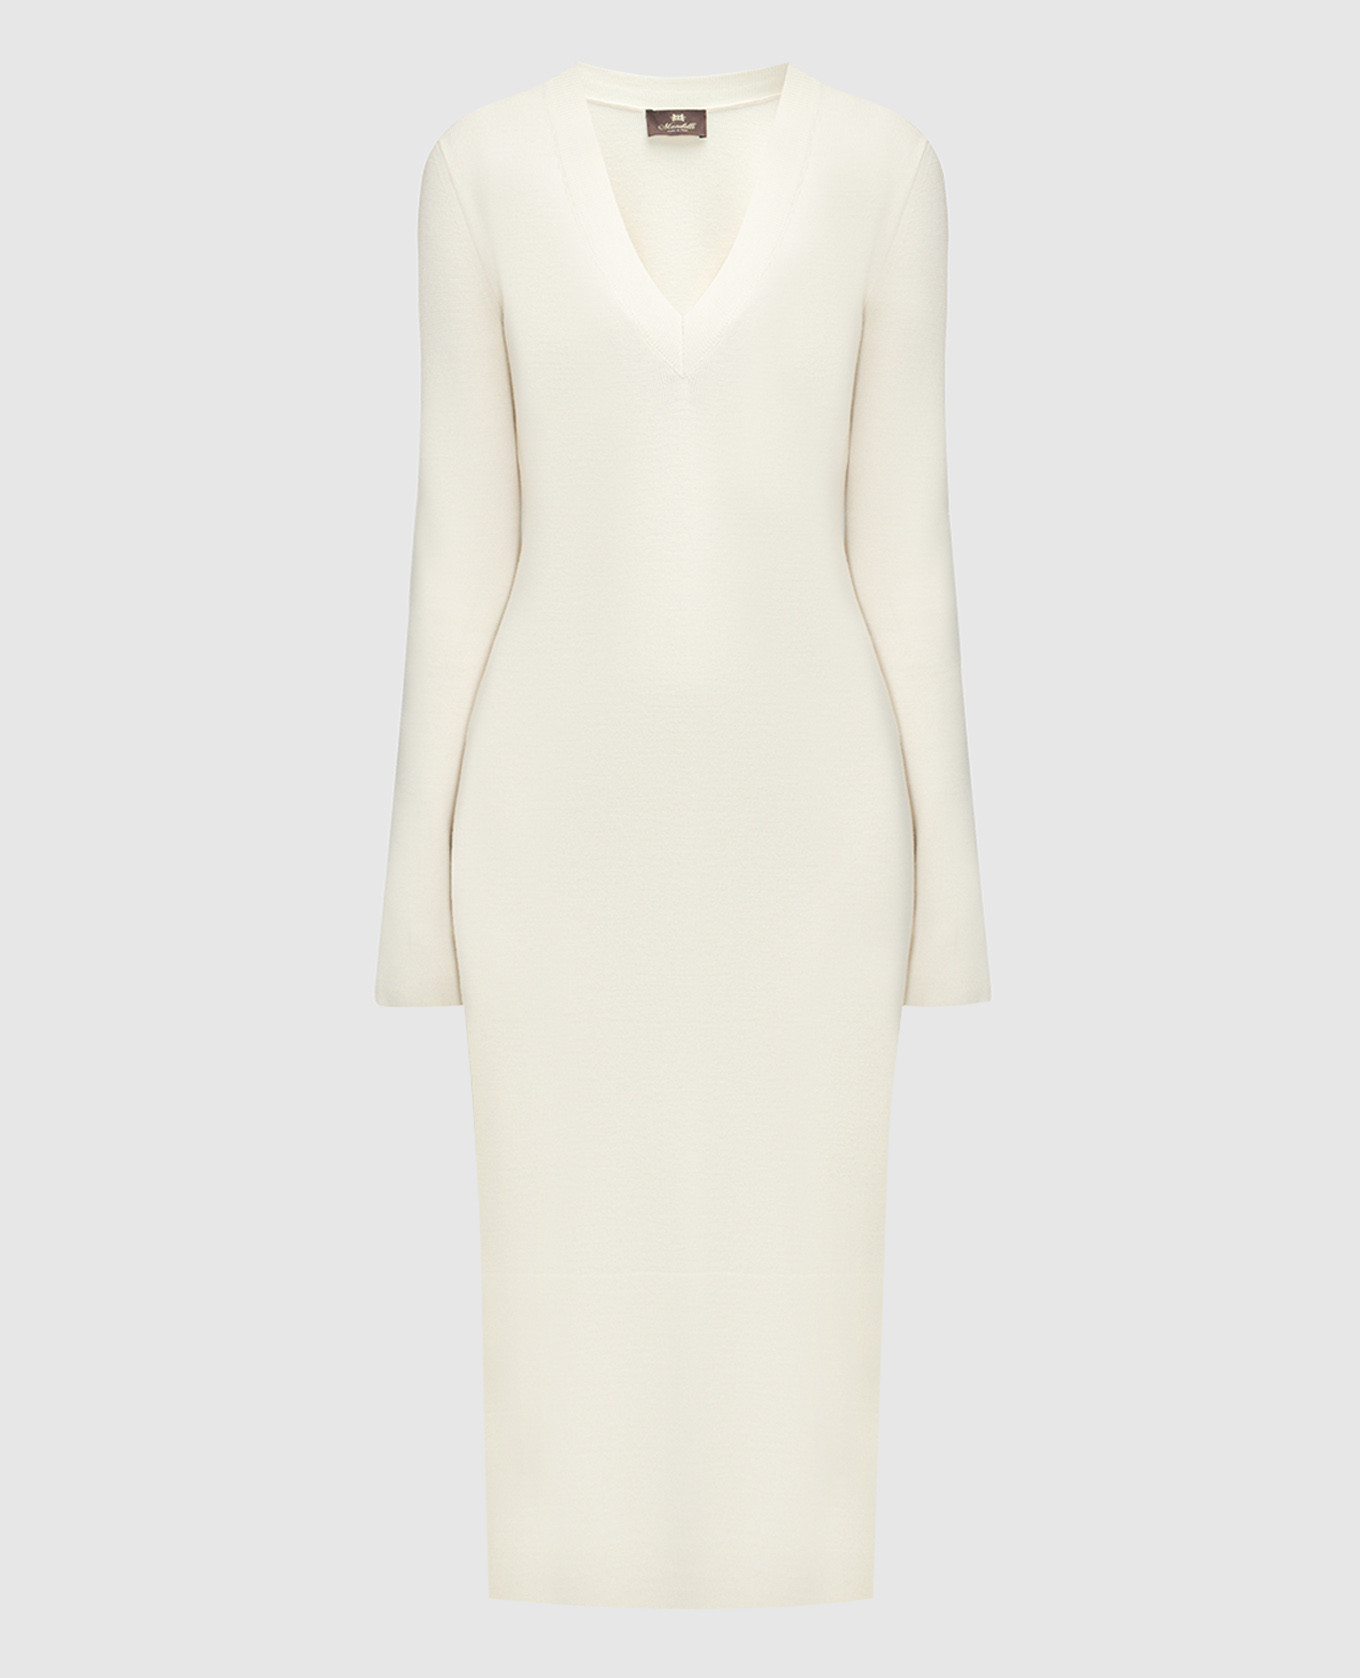 White midi dress made of wool